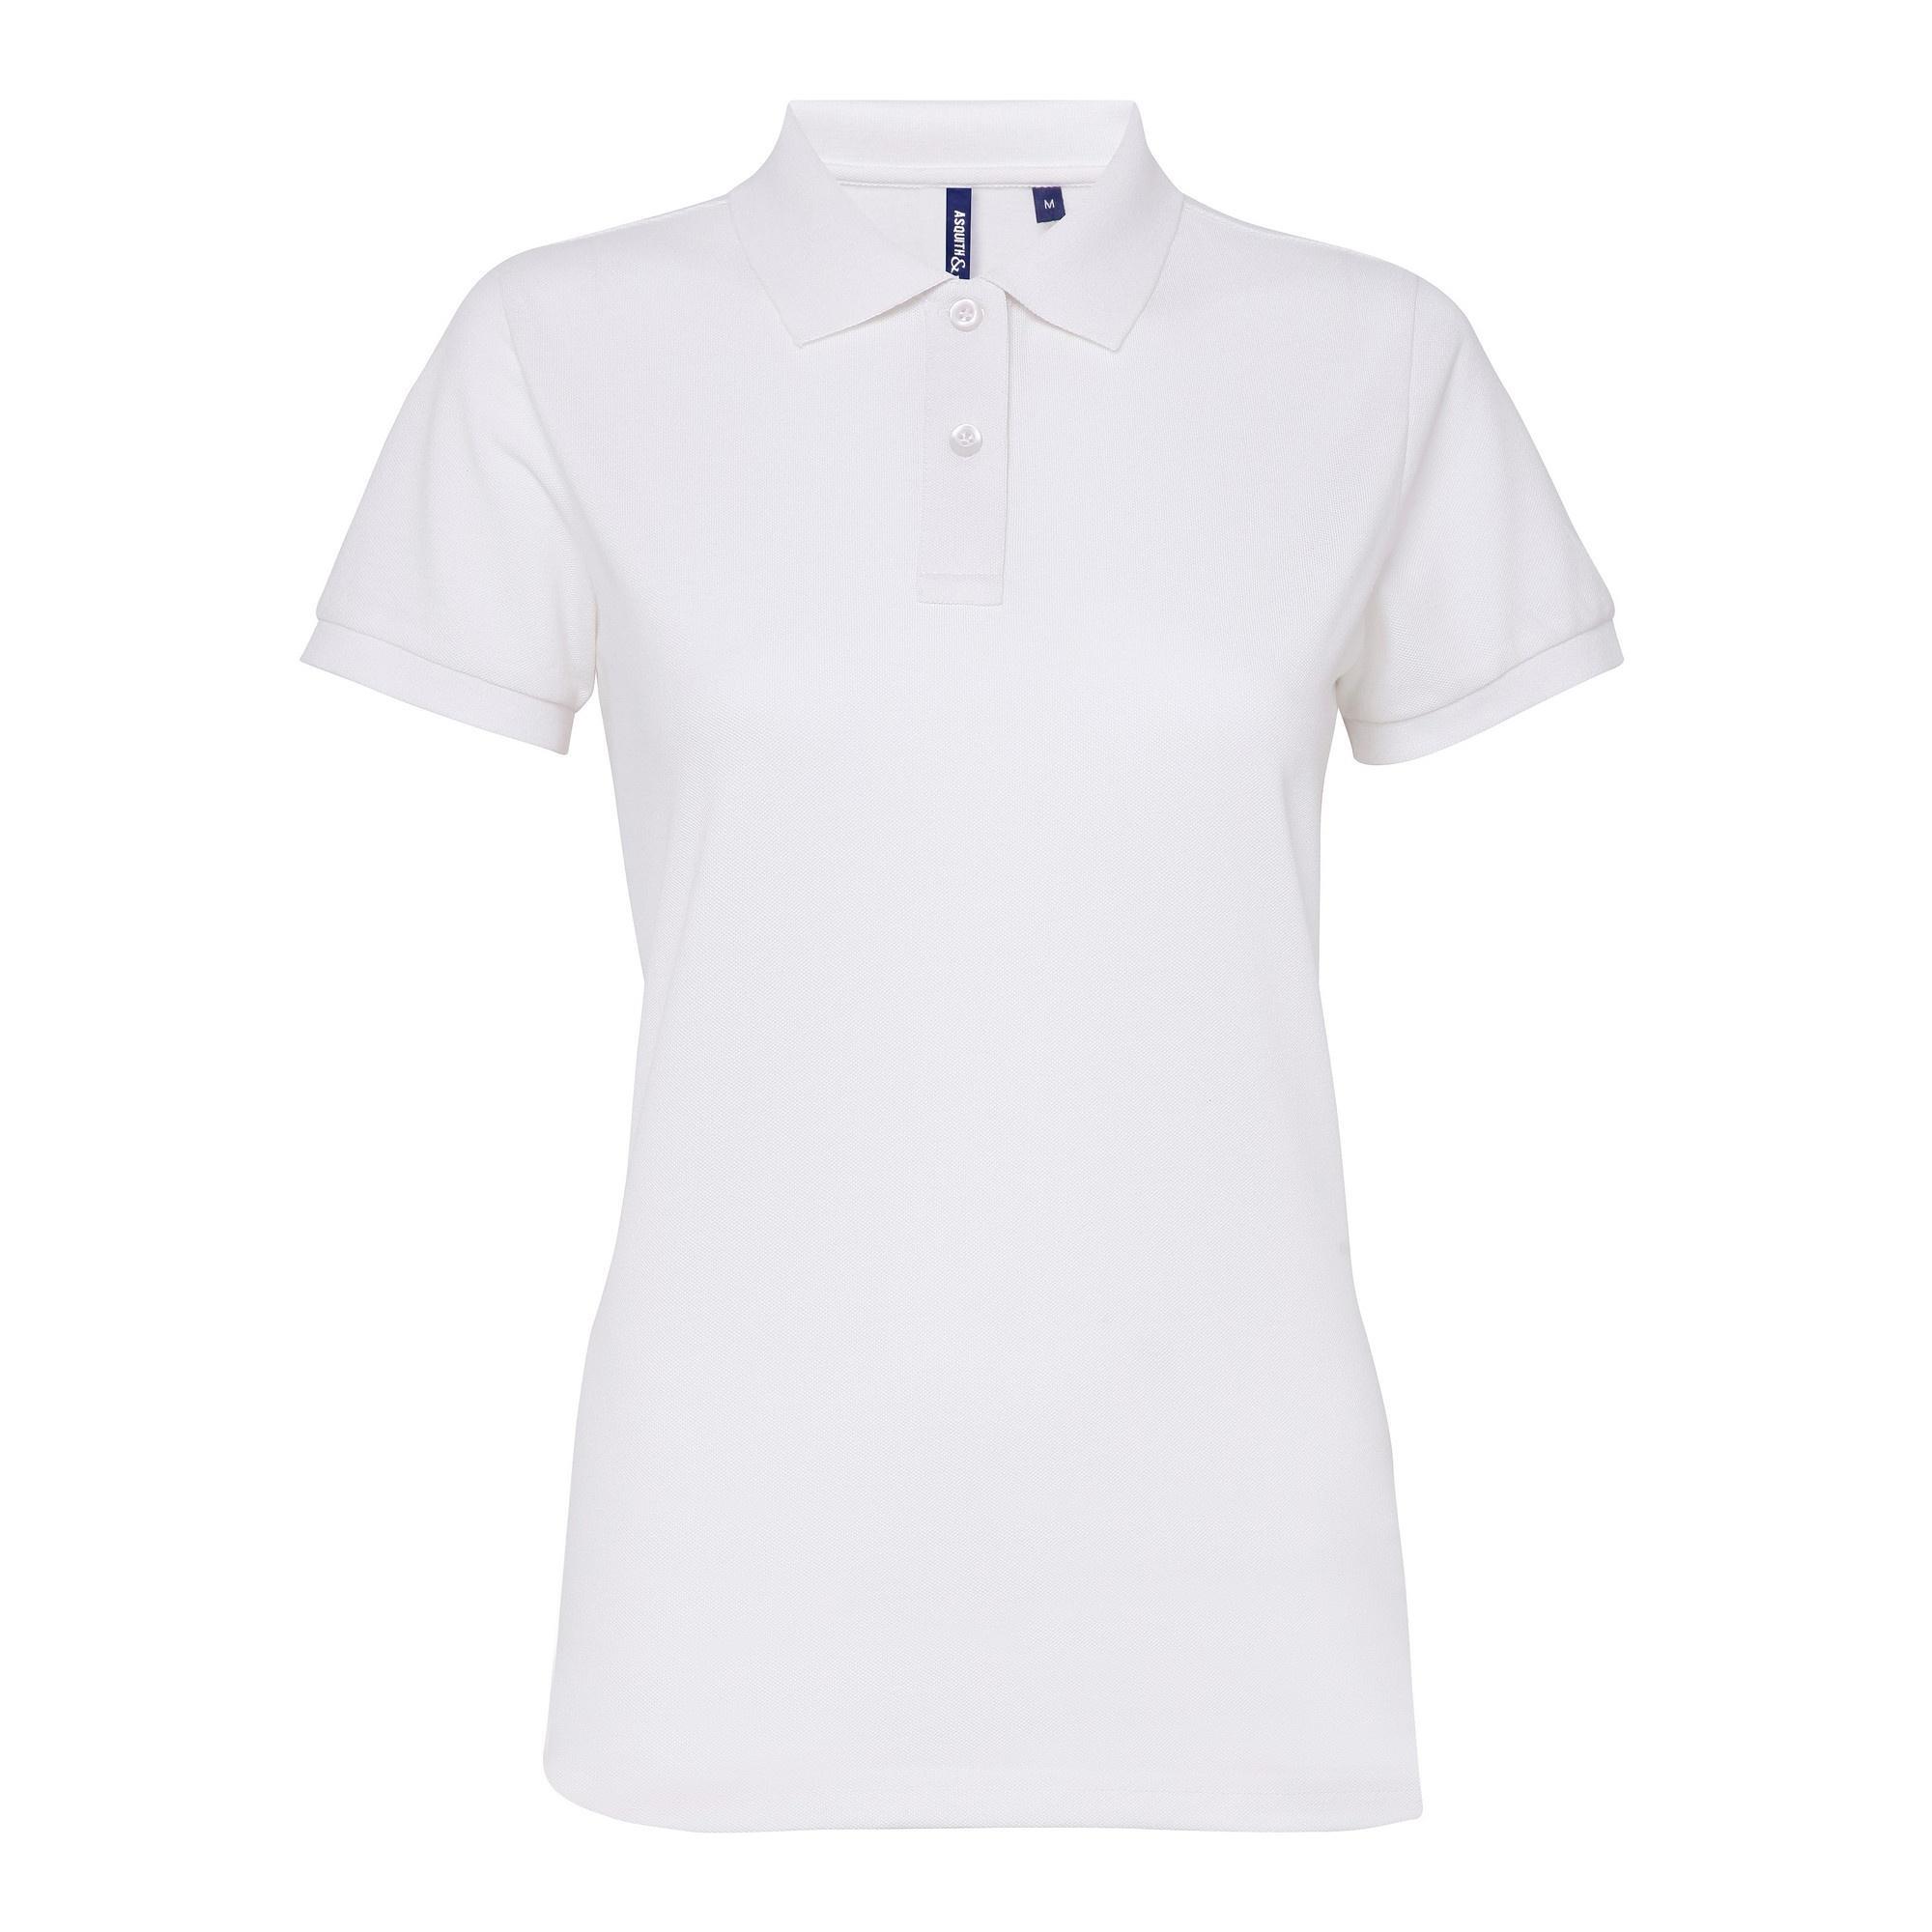 Asquith & Fox Womens/Ladies Short Sleeve Performance Blend Polo Shirt (White) (S)